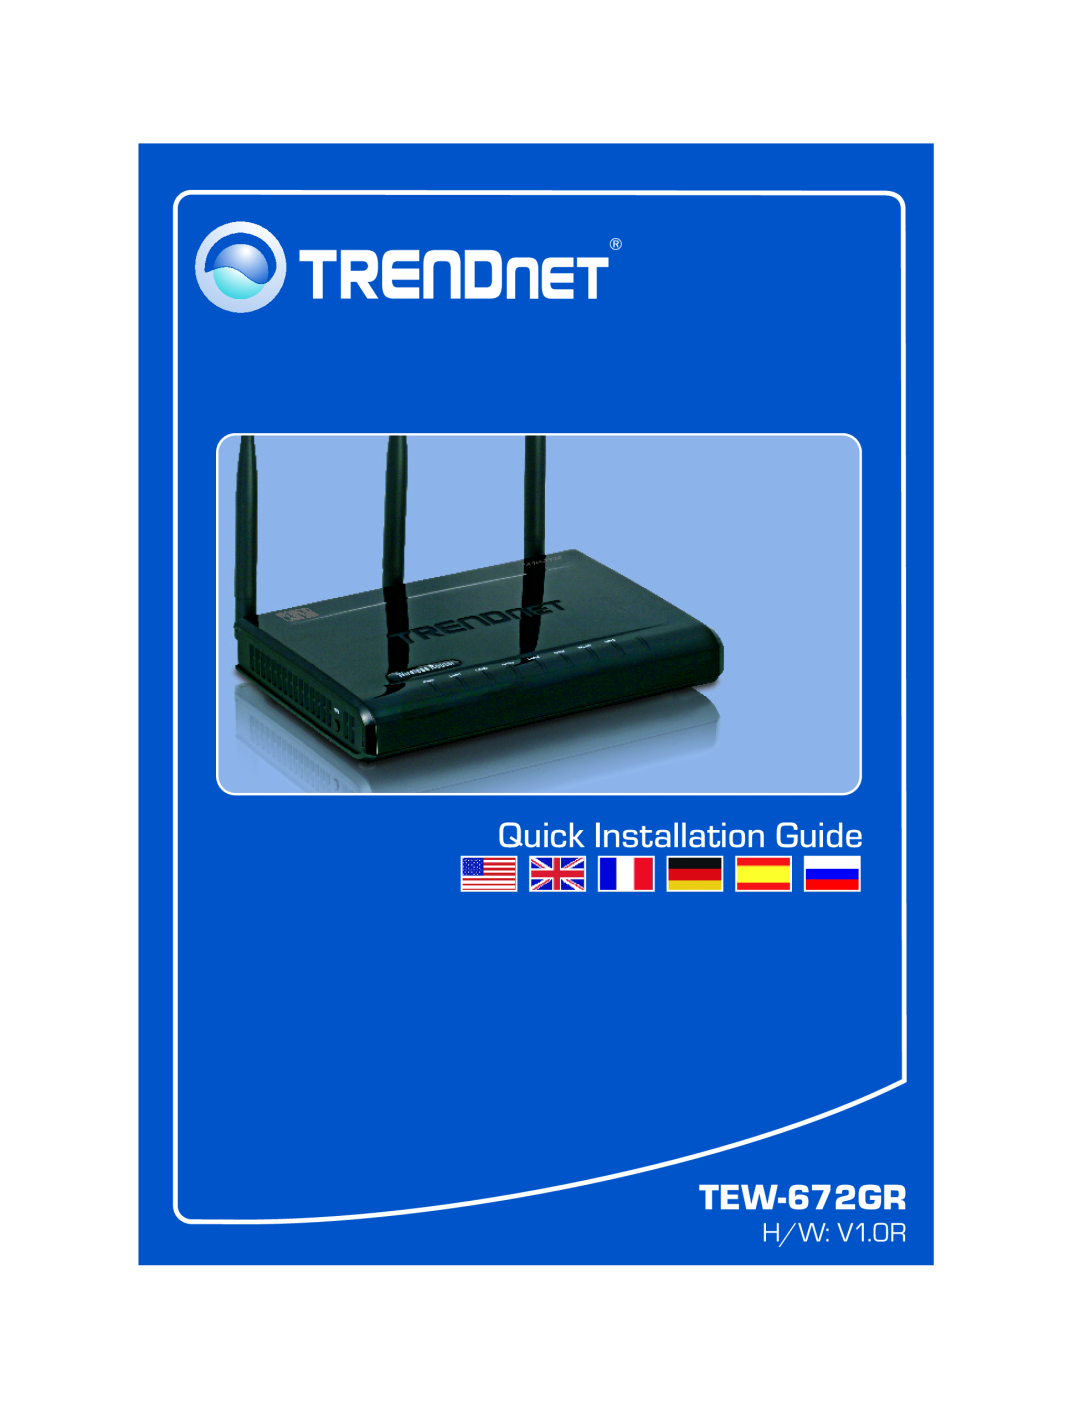 TRENDnet TEW-672GR manual Quick Installation Guide, H/W V1.0R 